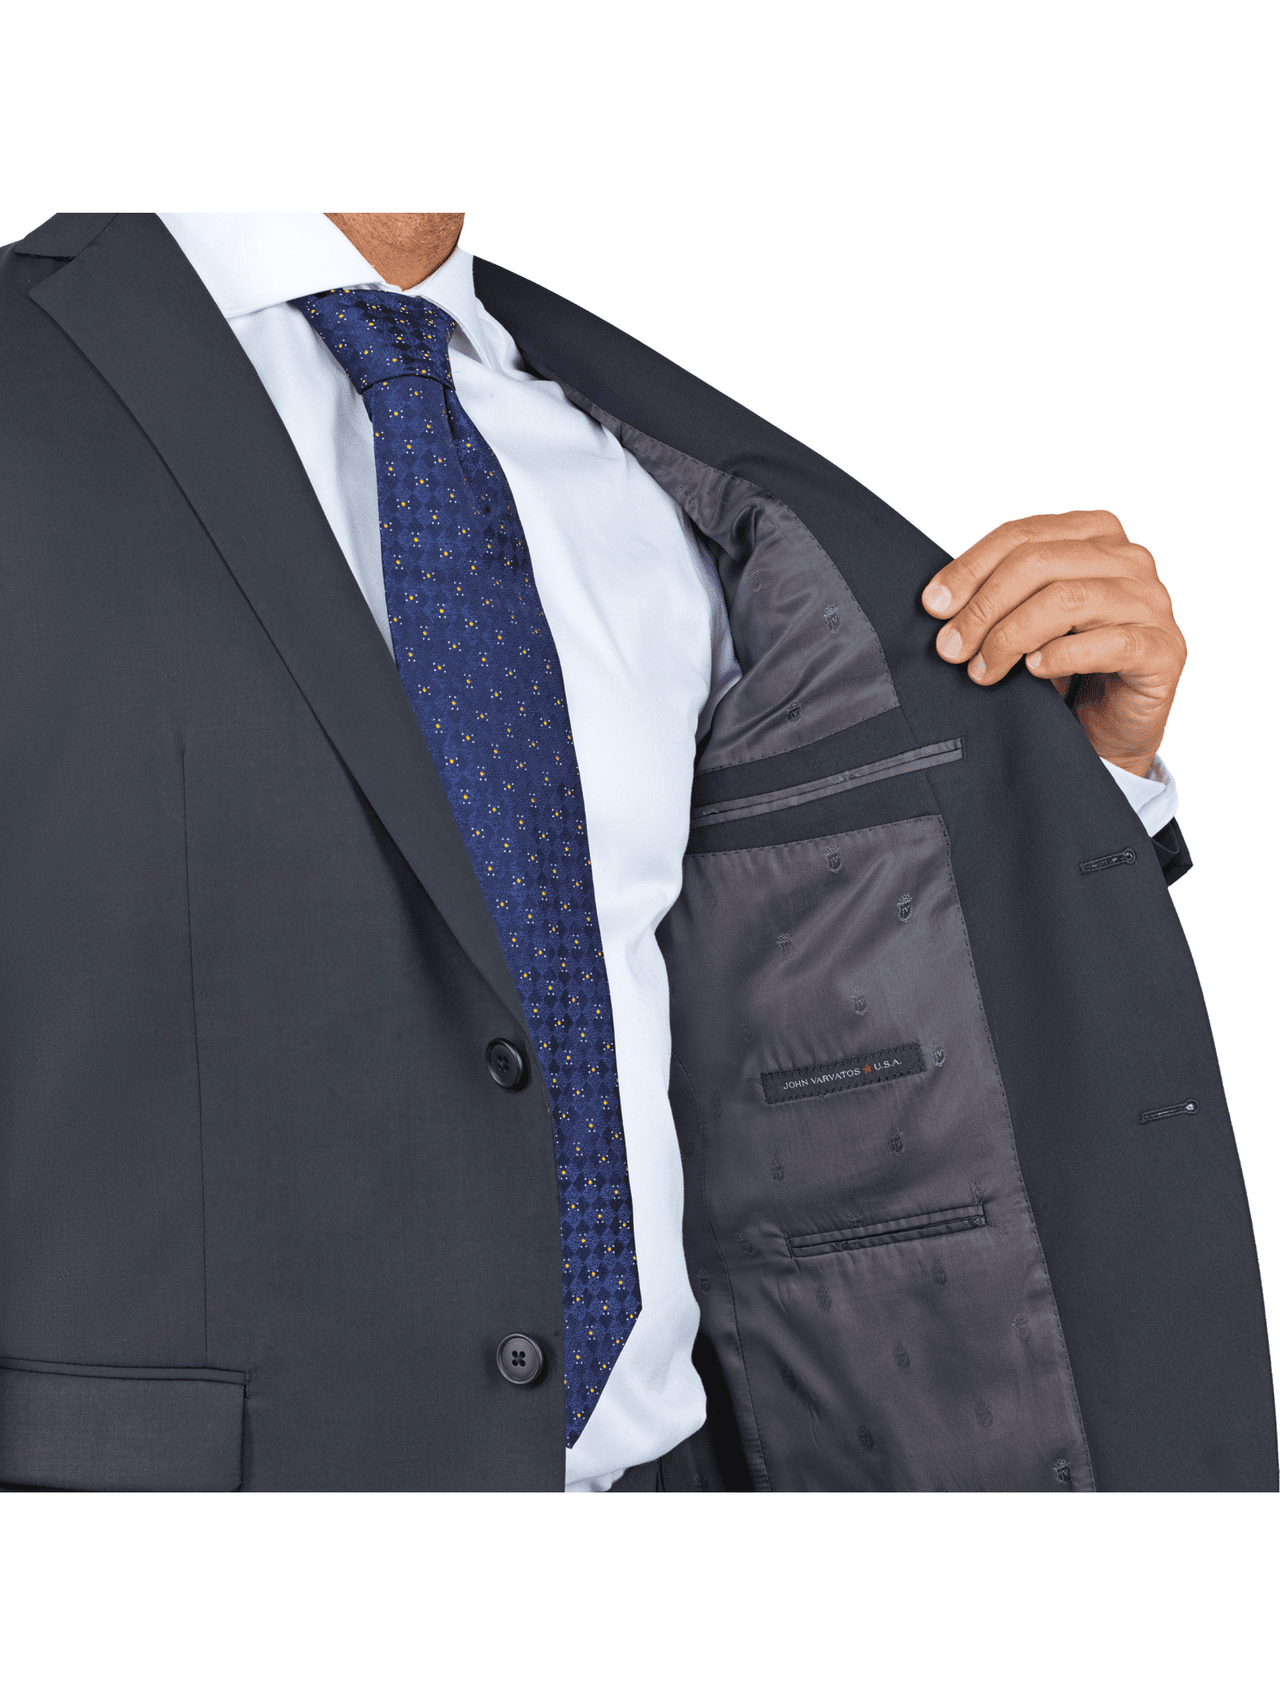 lining of John Varvatos black slim fit men's suit jacket